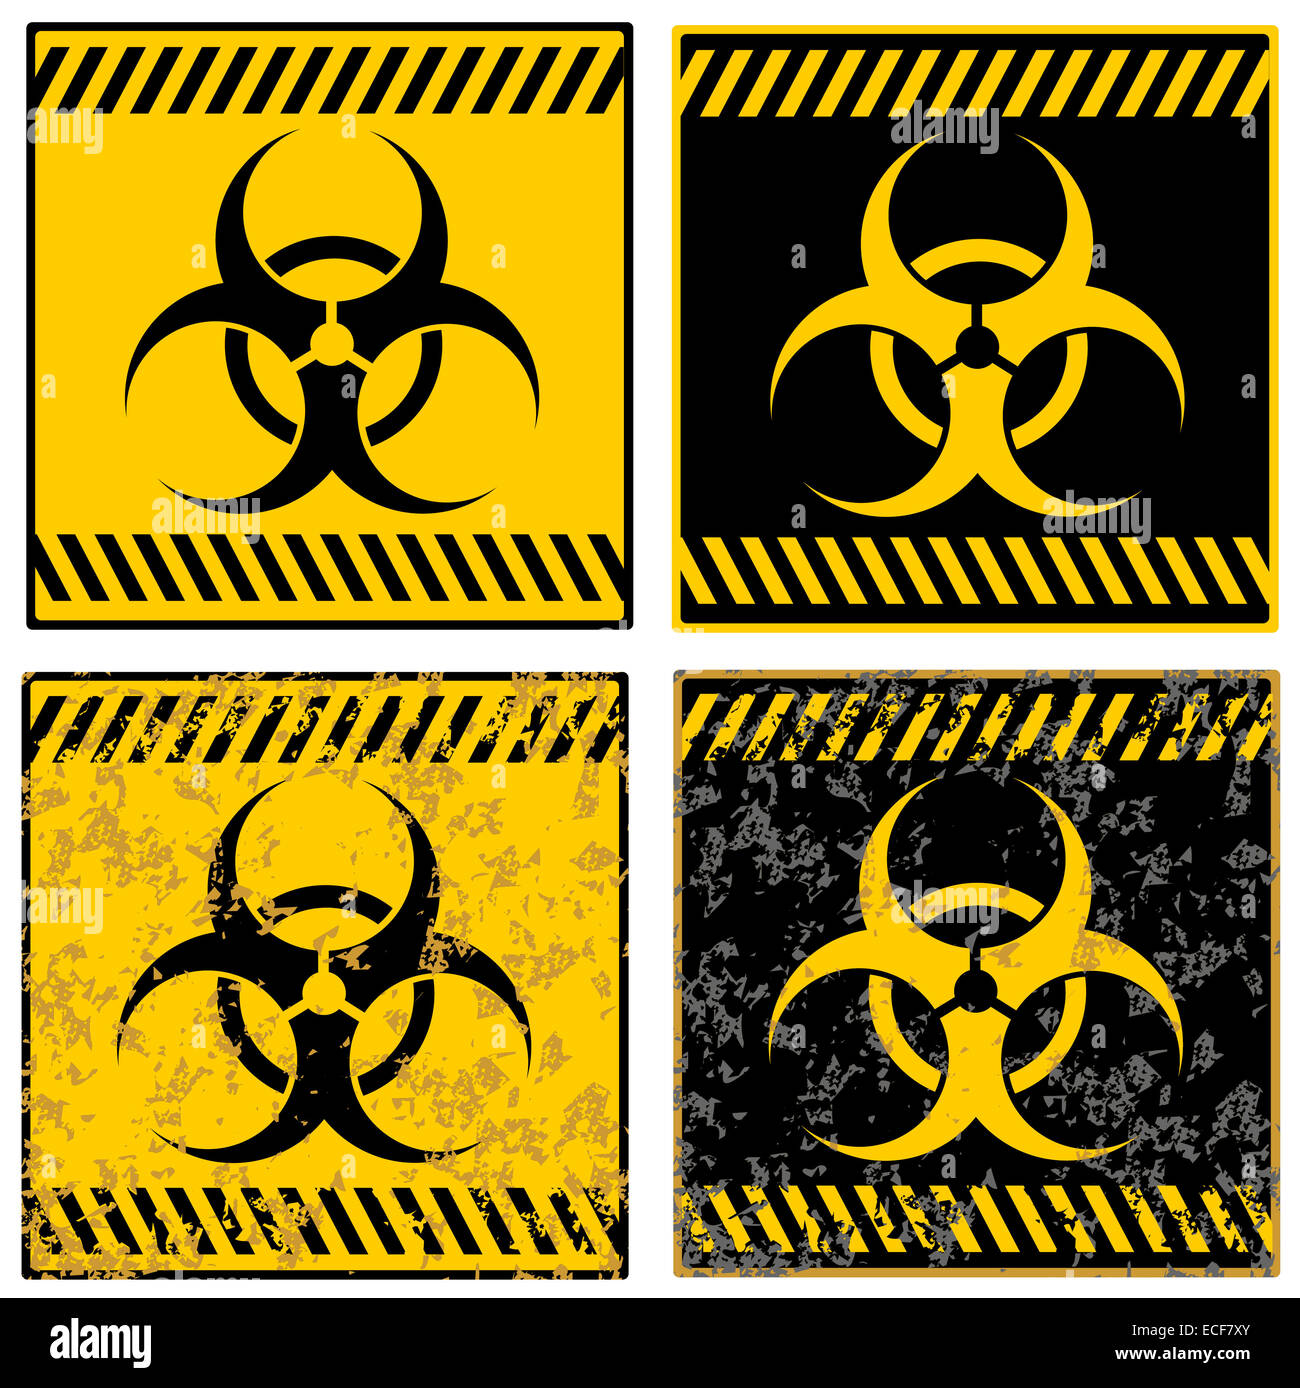 Grunge biohazard sign background illustration Stock Photo